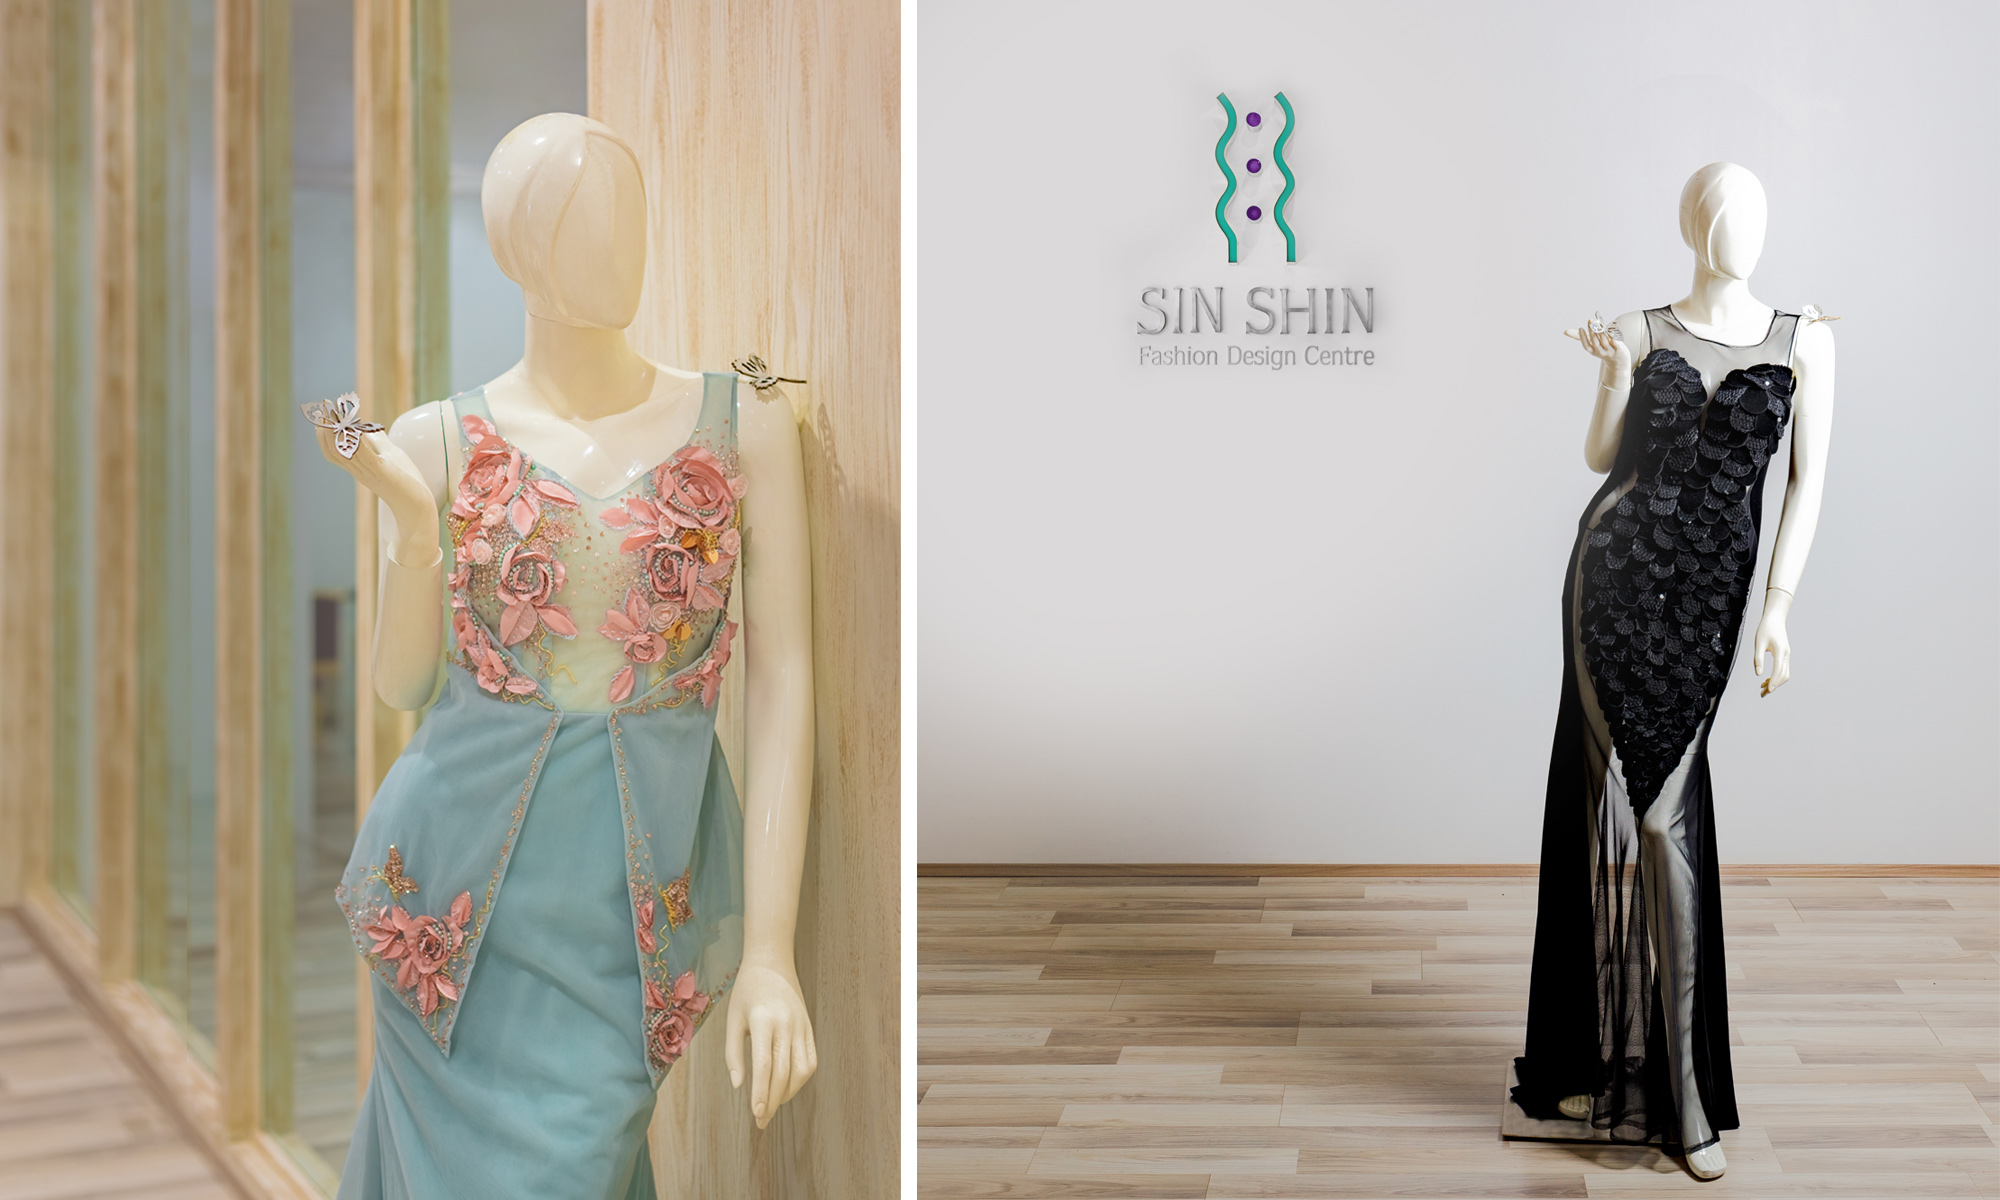  Sin Shin Fashion Design Centre